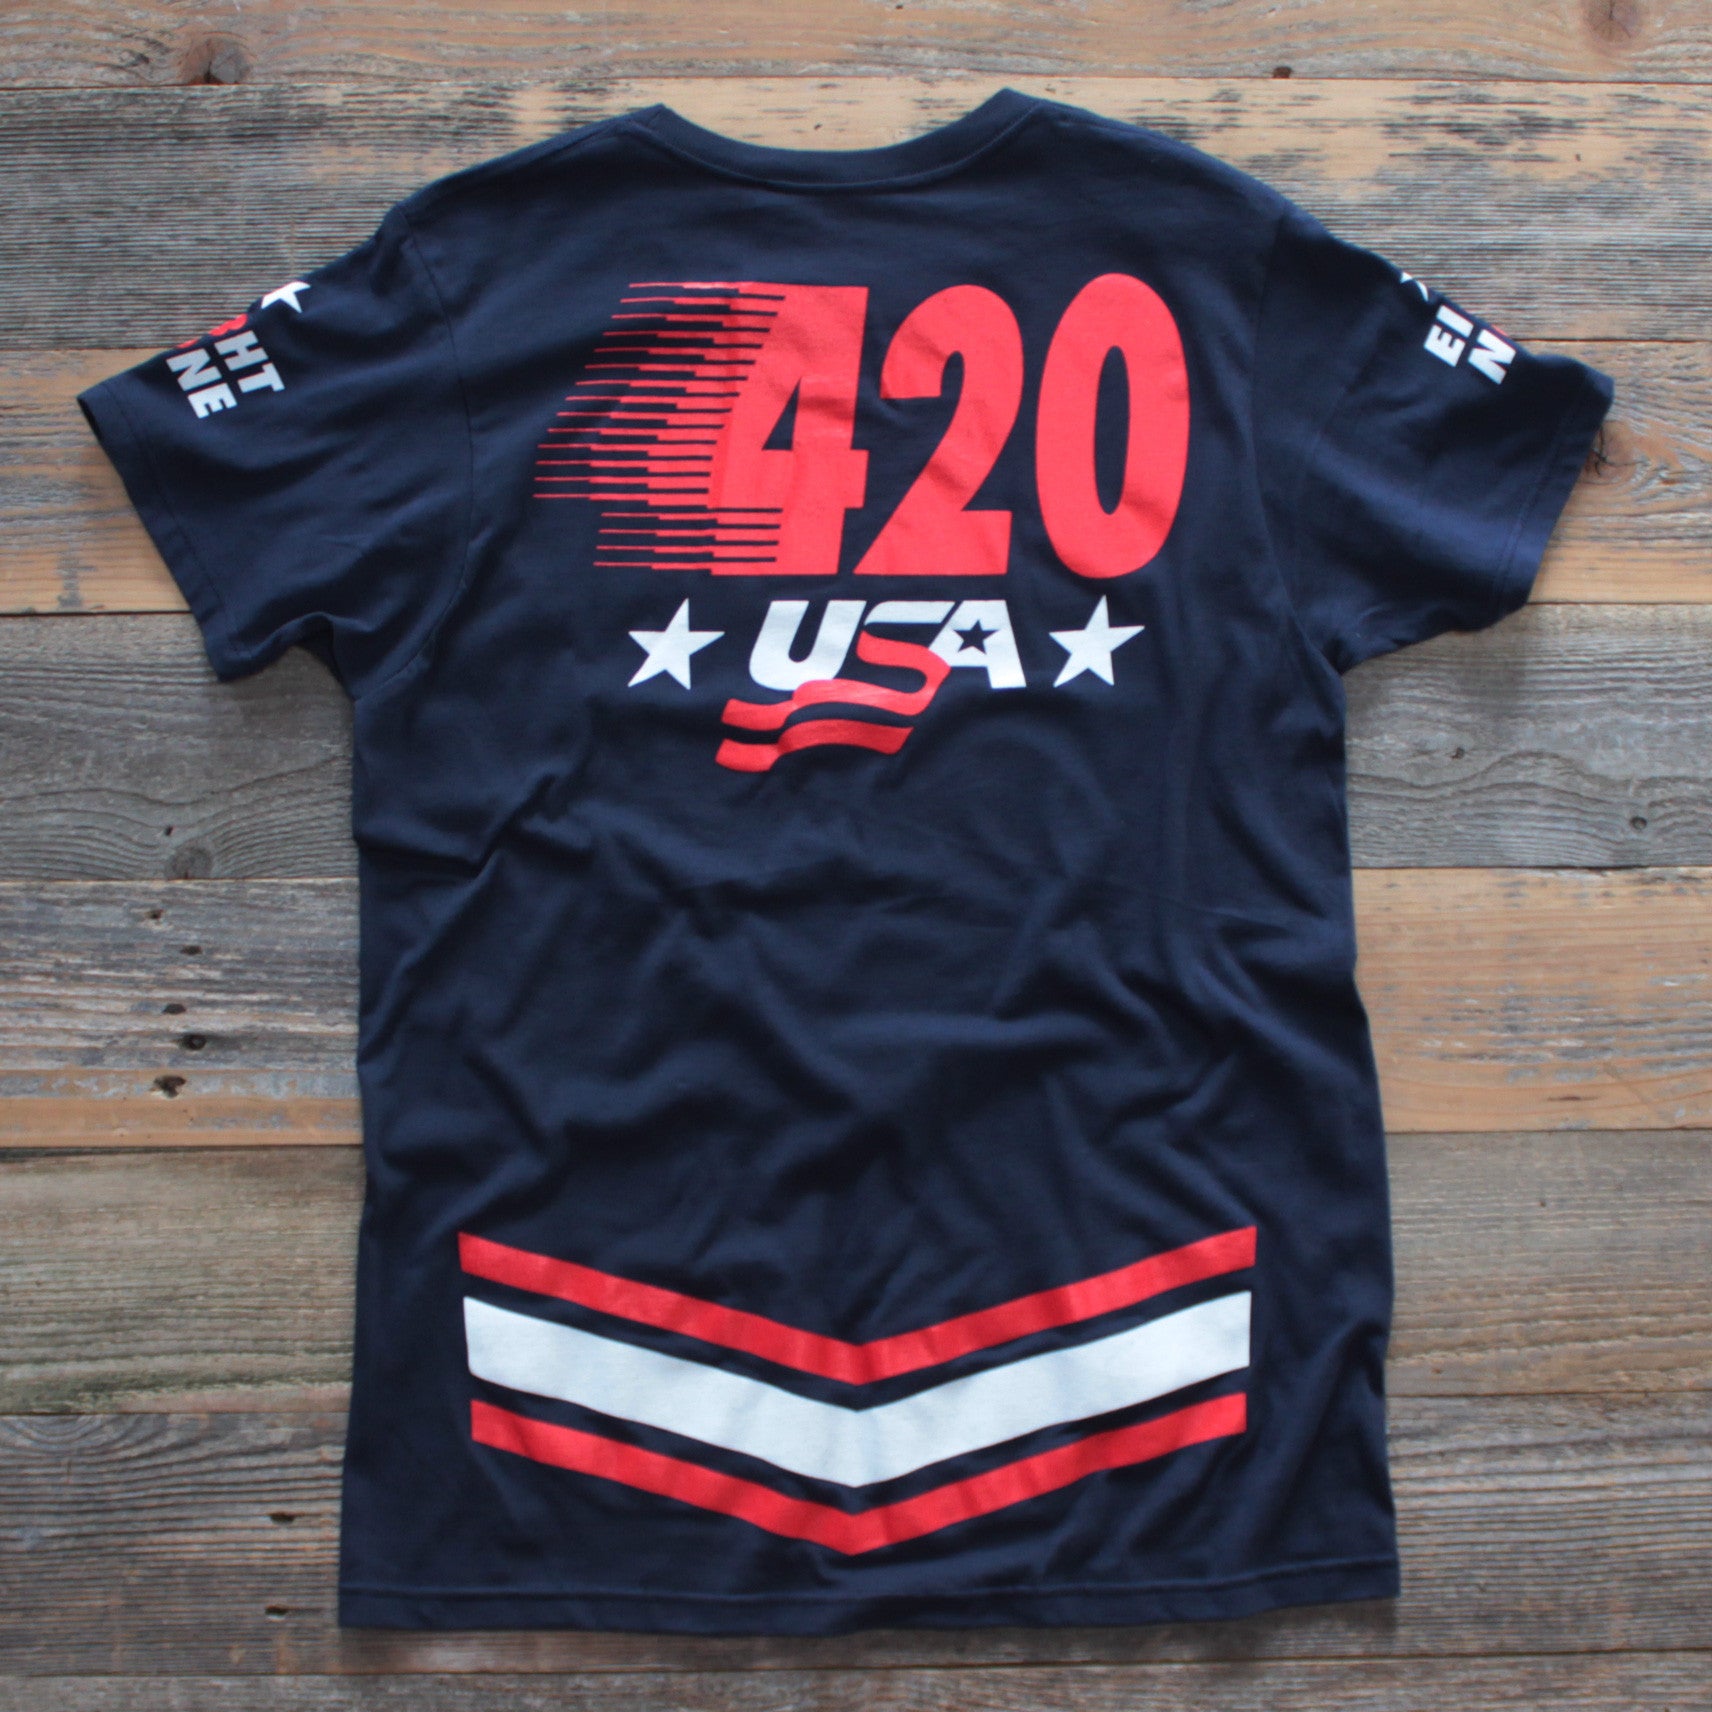 USA 420 T Shirt - 2